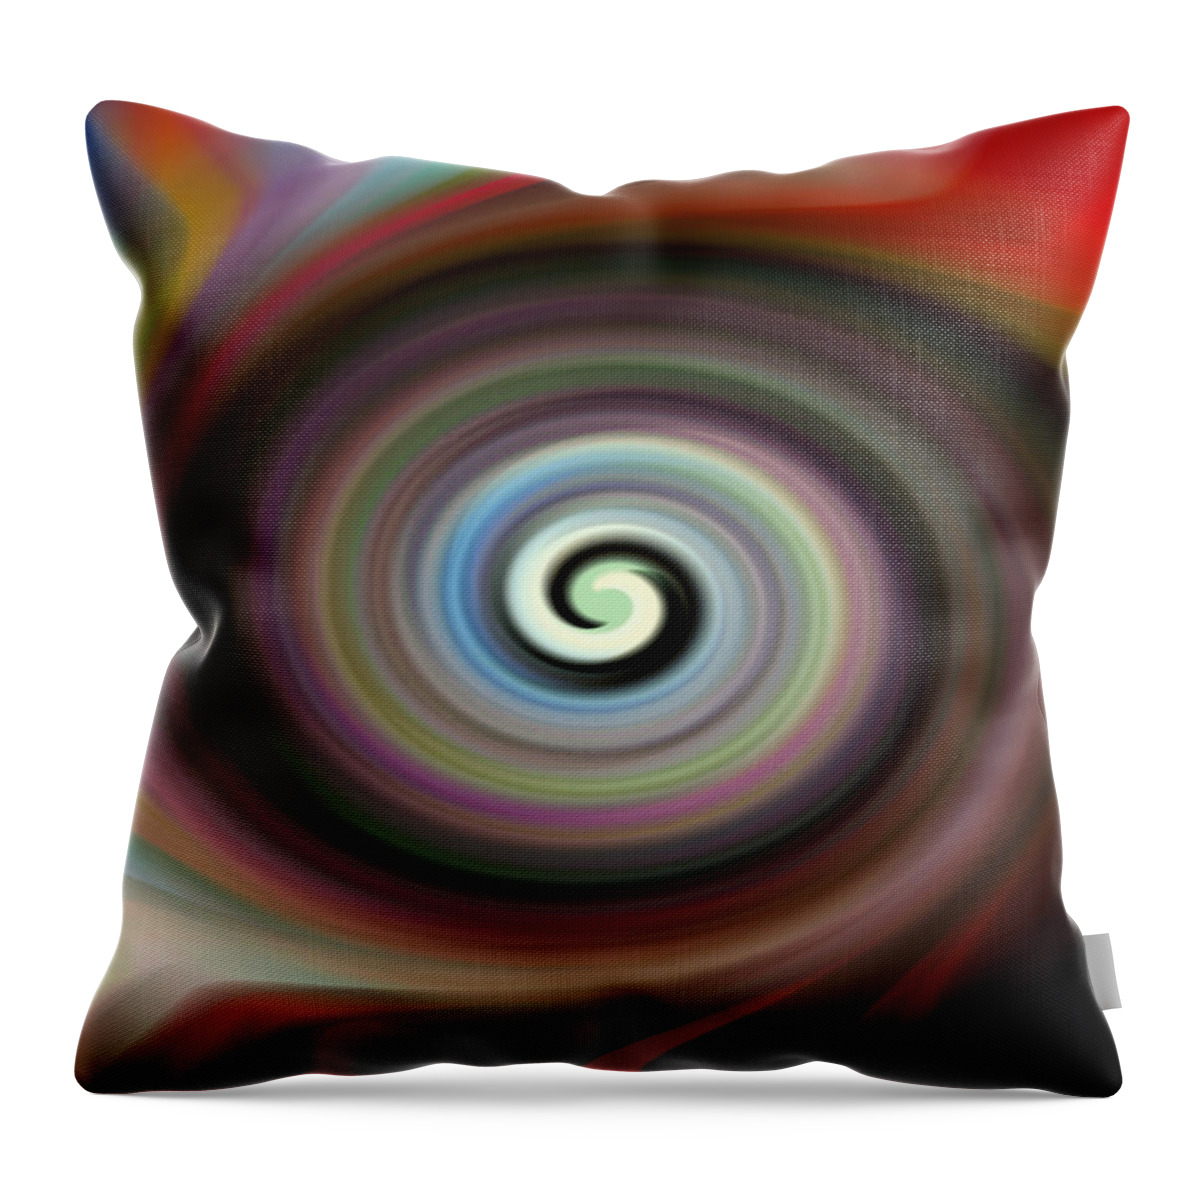 Digital Art Throw Pillow featuring the drawing Circled Carma by Luc Van de Steeg